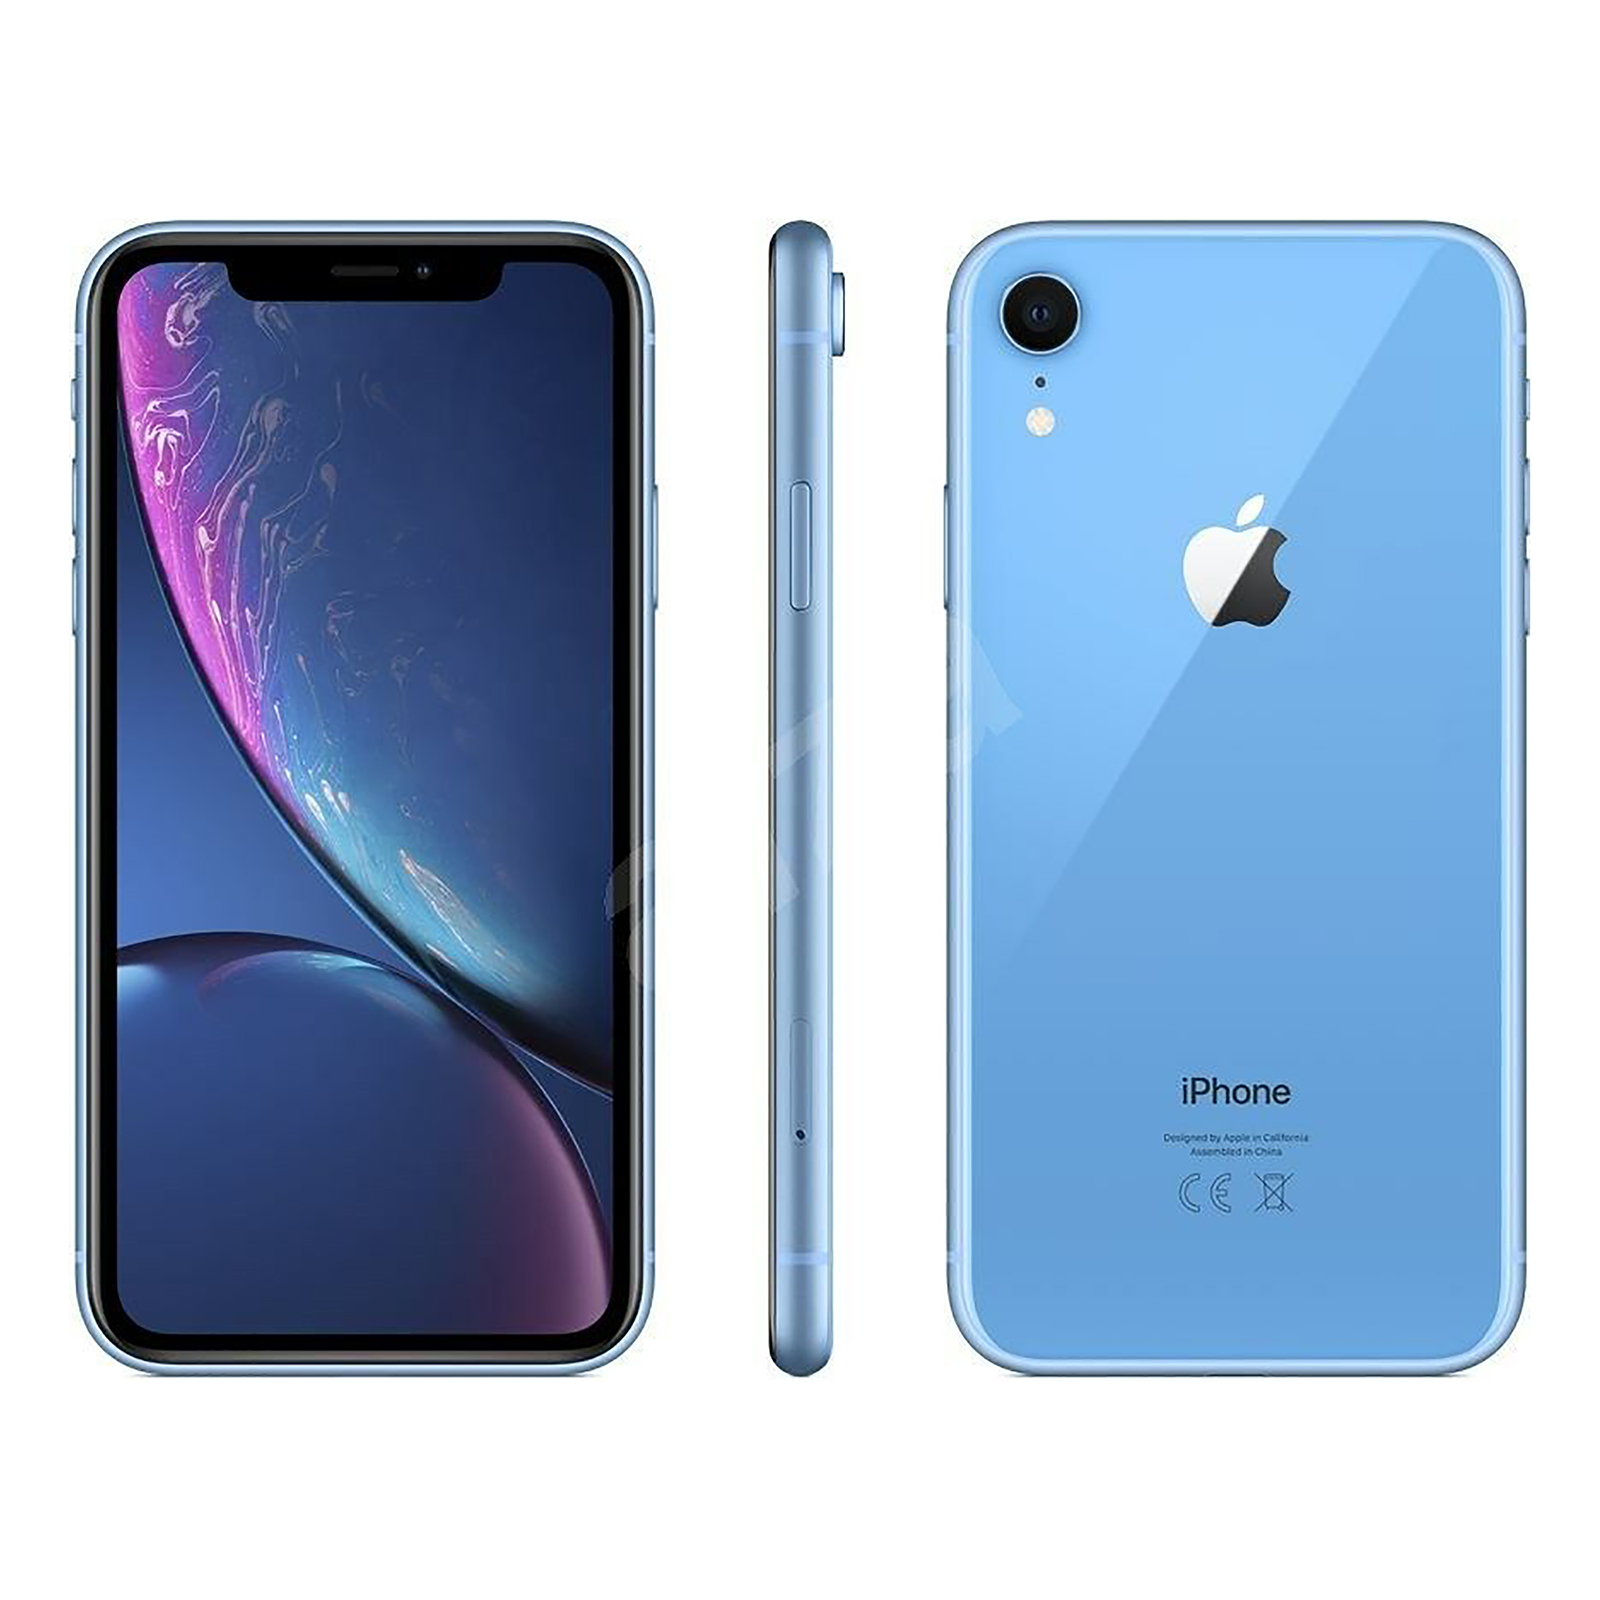 Apple iPhone XR 256GB Smartphone (Unlocked) - Blue